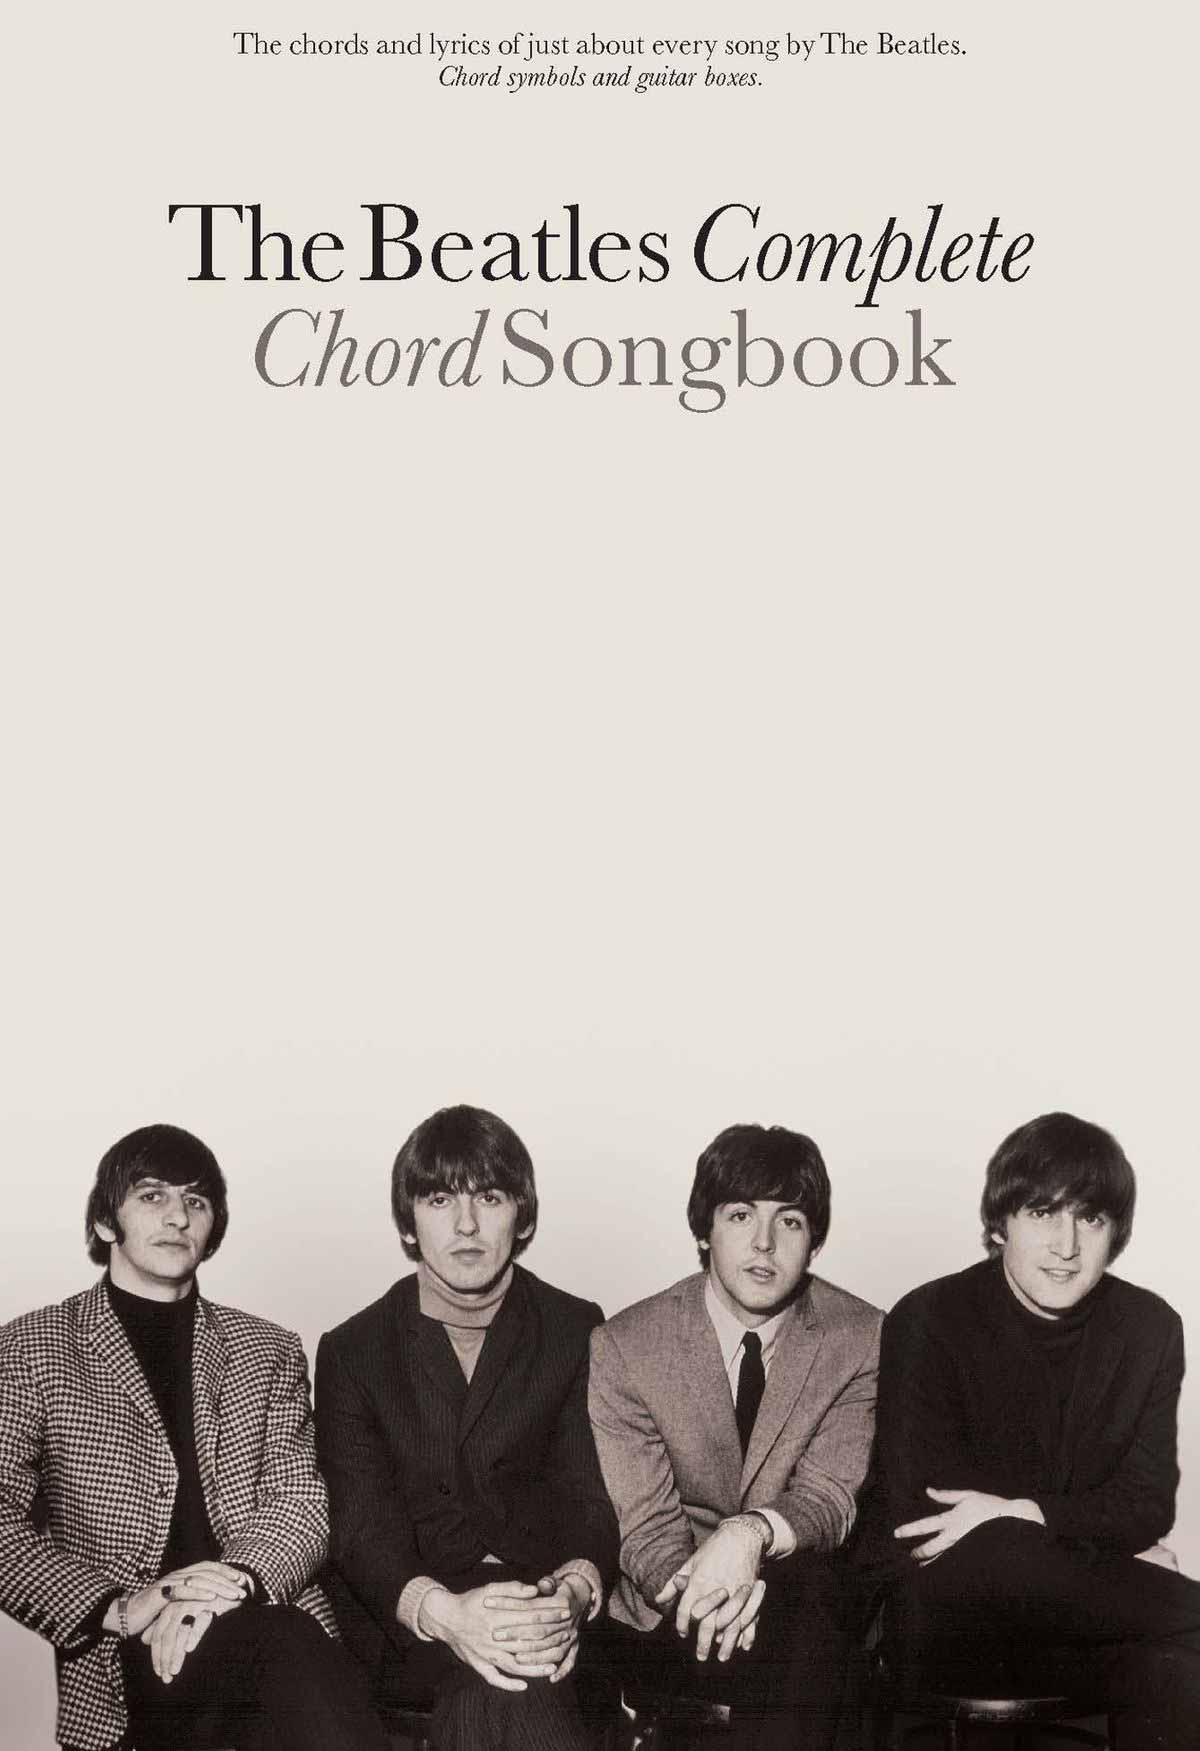 Songbook chordpro keygen for mac